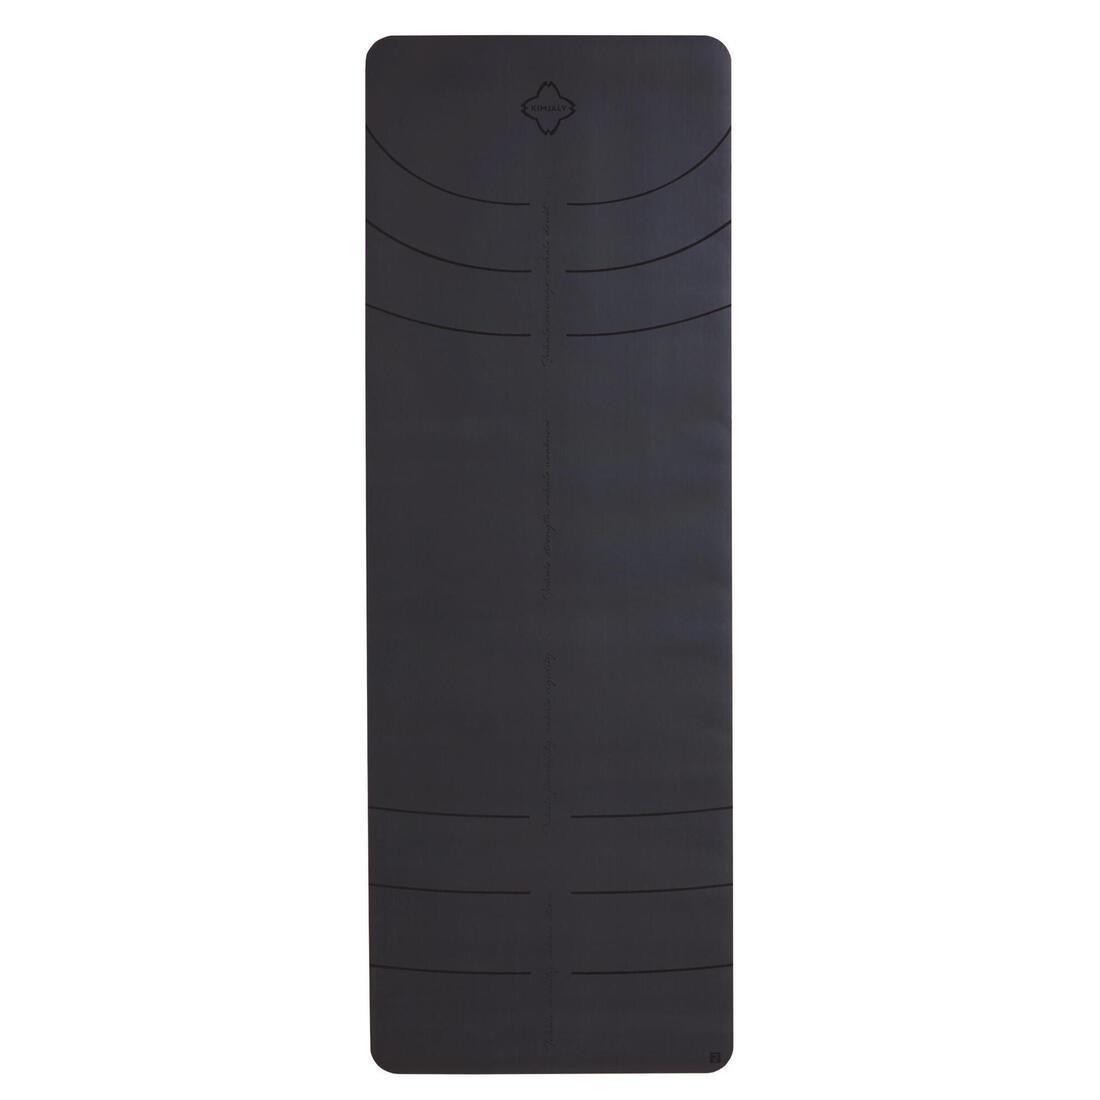 KIMJALY - Yoga Mat Grip, Black